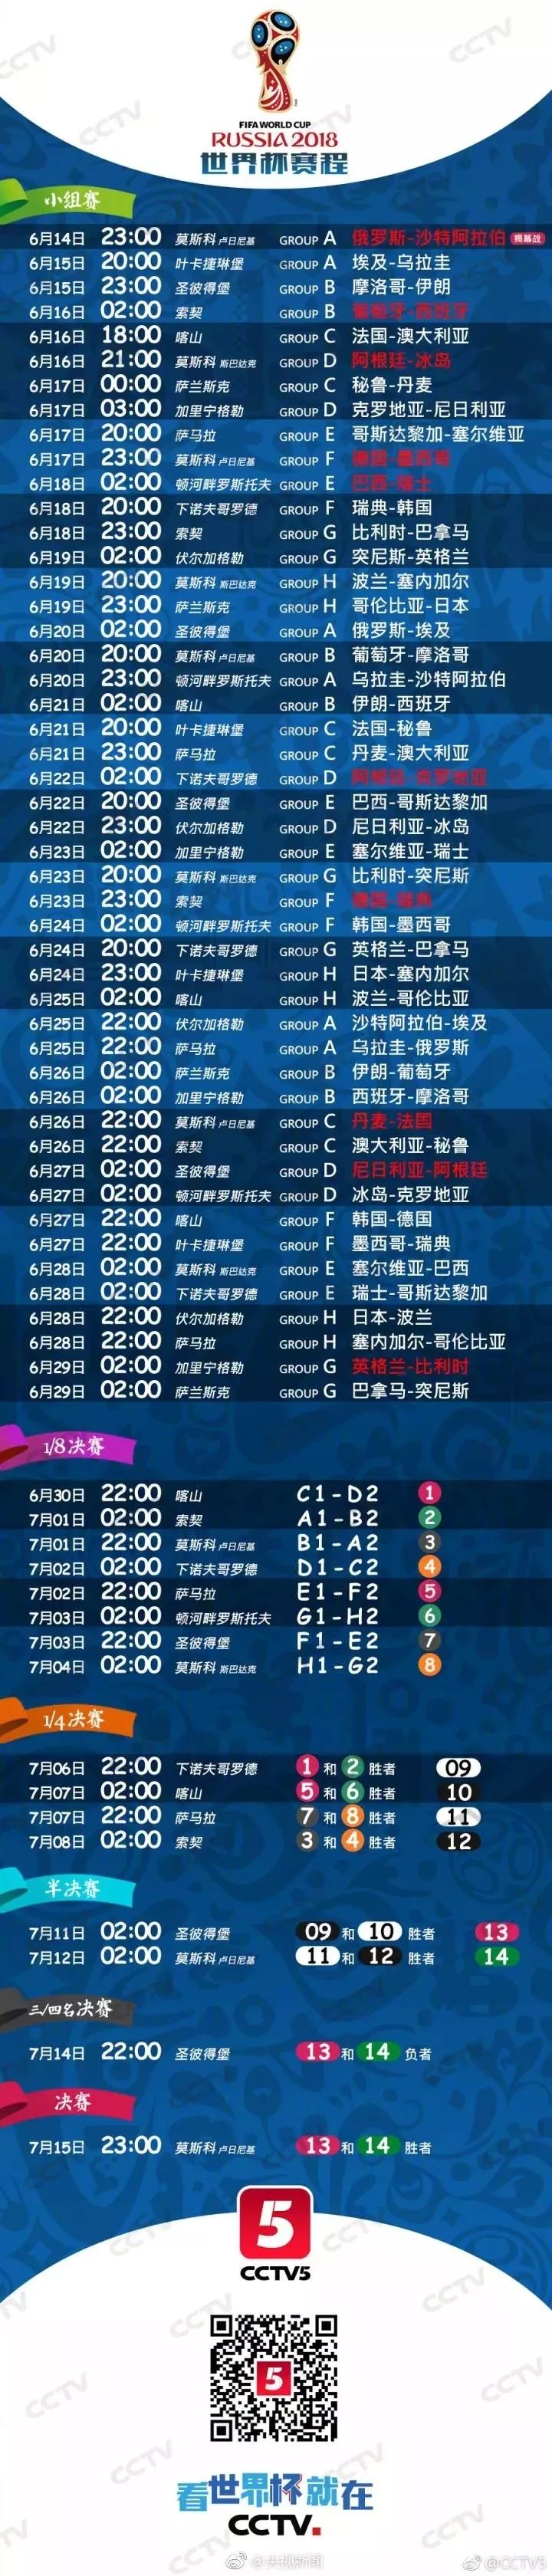 China_Media_Group_ready_for_World_Cup_2018_世界杯！中央广播电视总台亮相红场